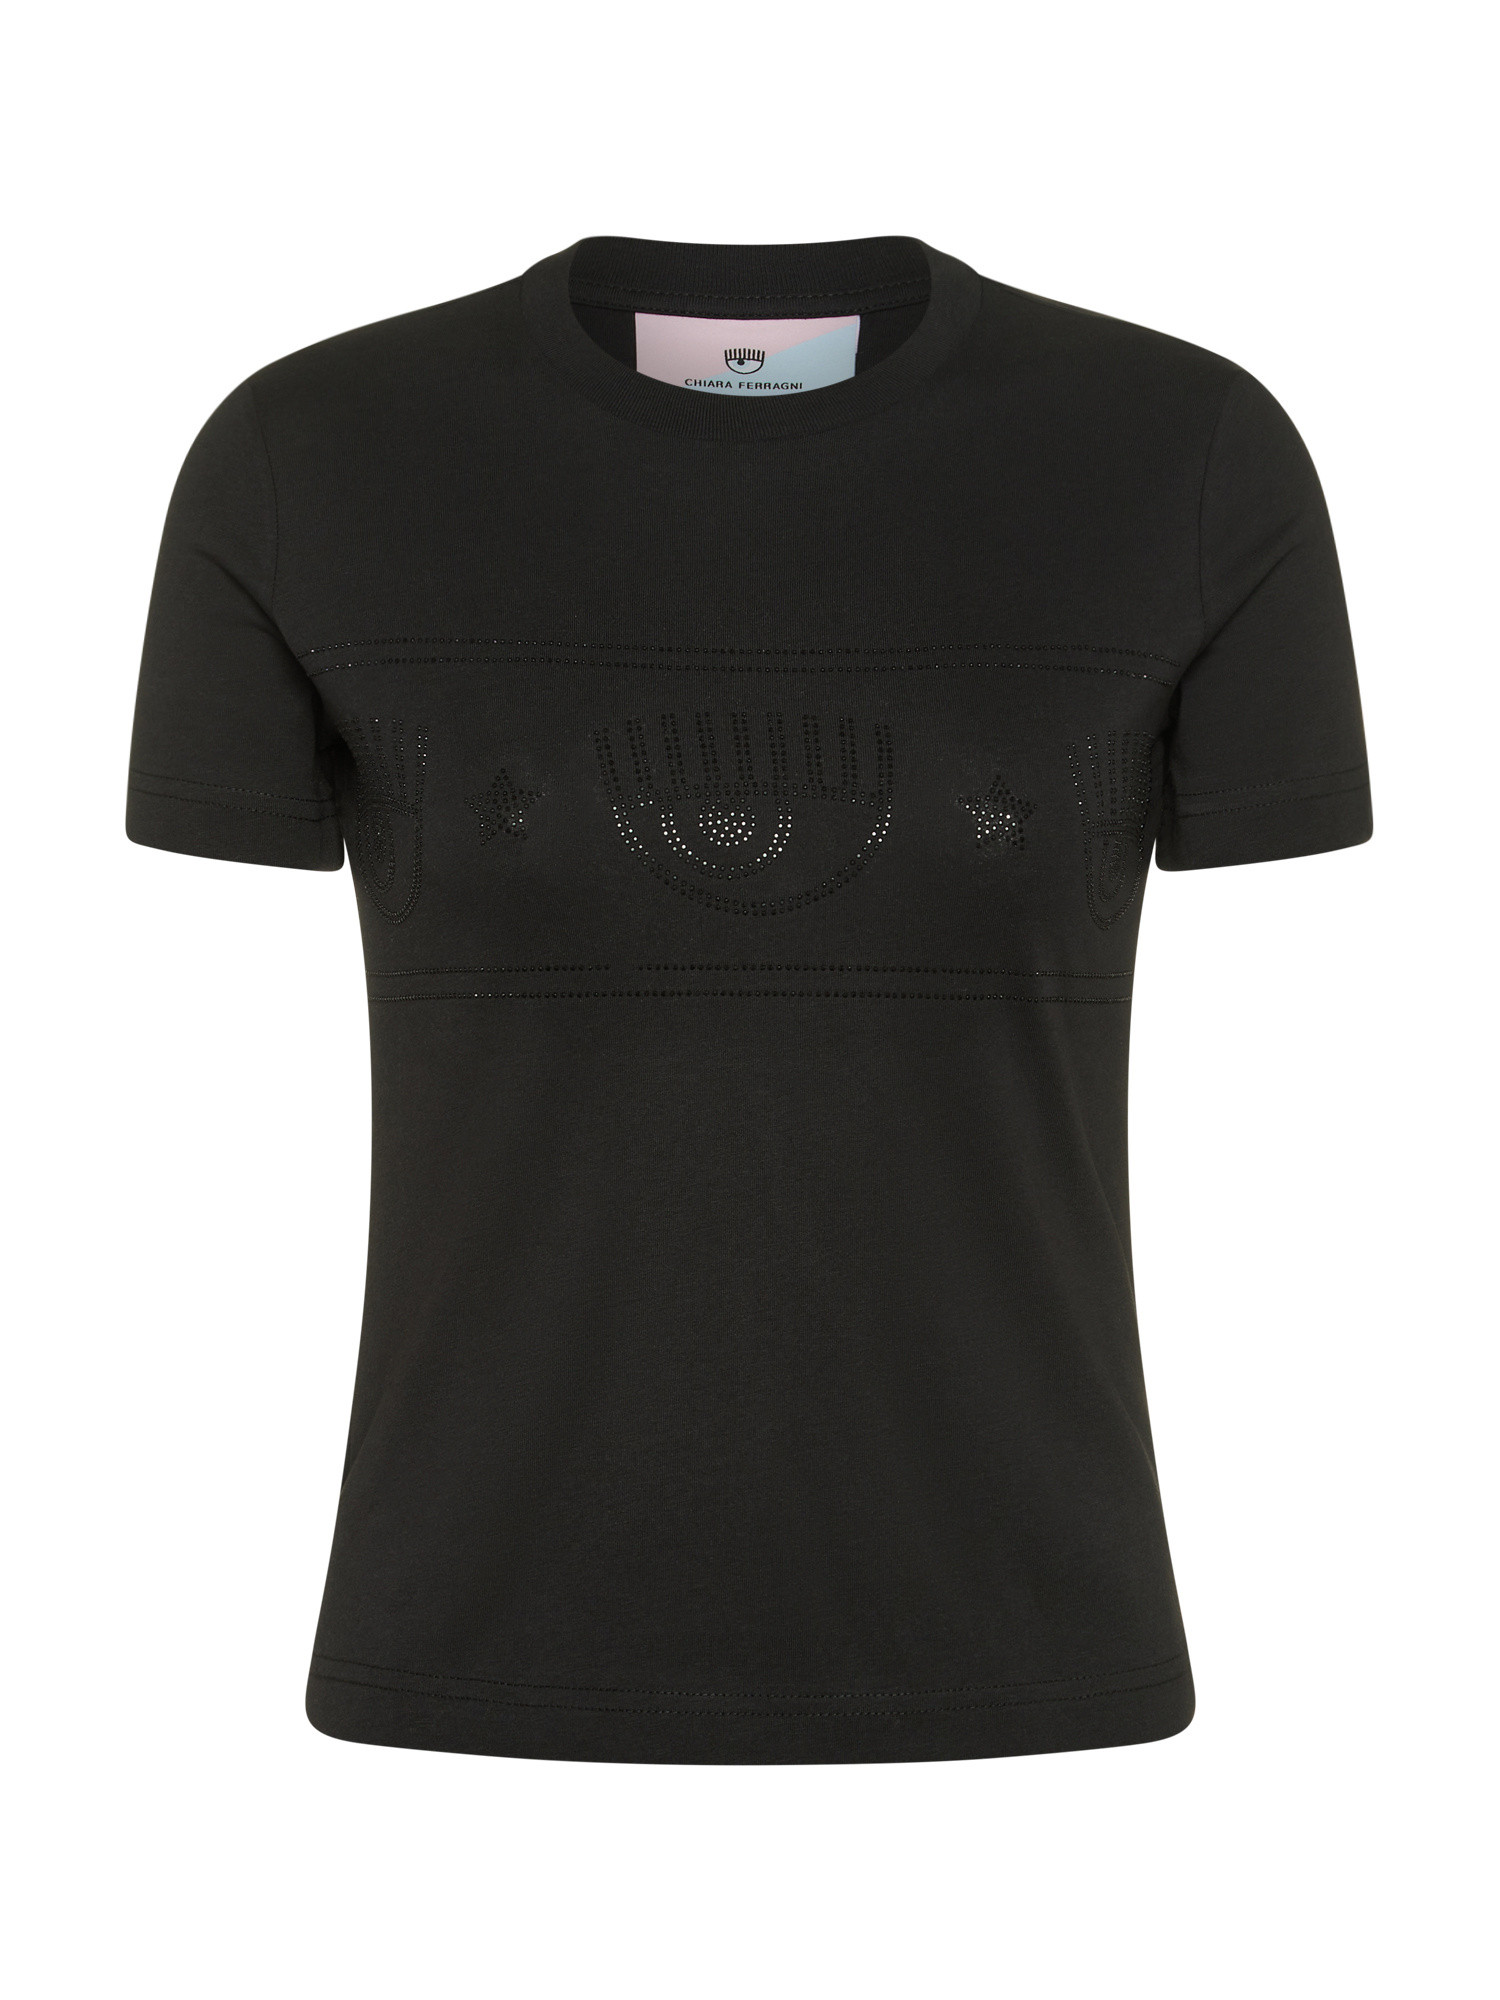 Chiara Ferragni - T-shirt  logo Eyestar strass, Nero, large image number 0